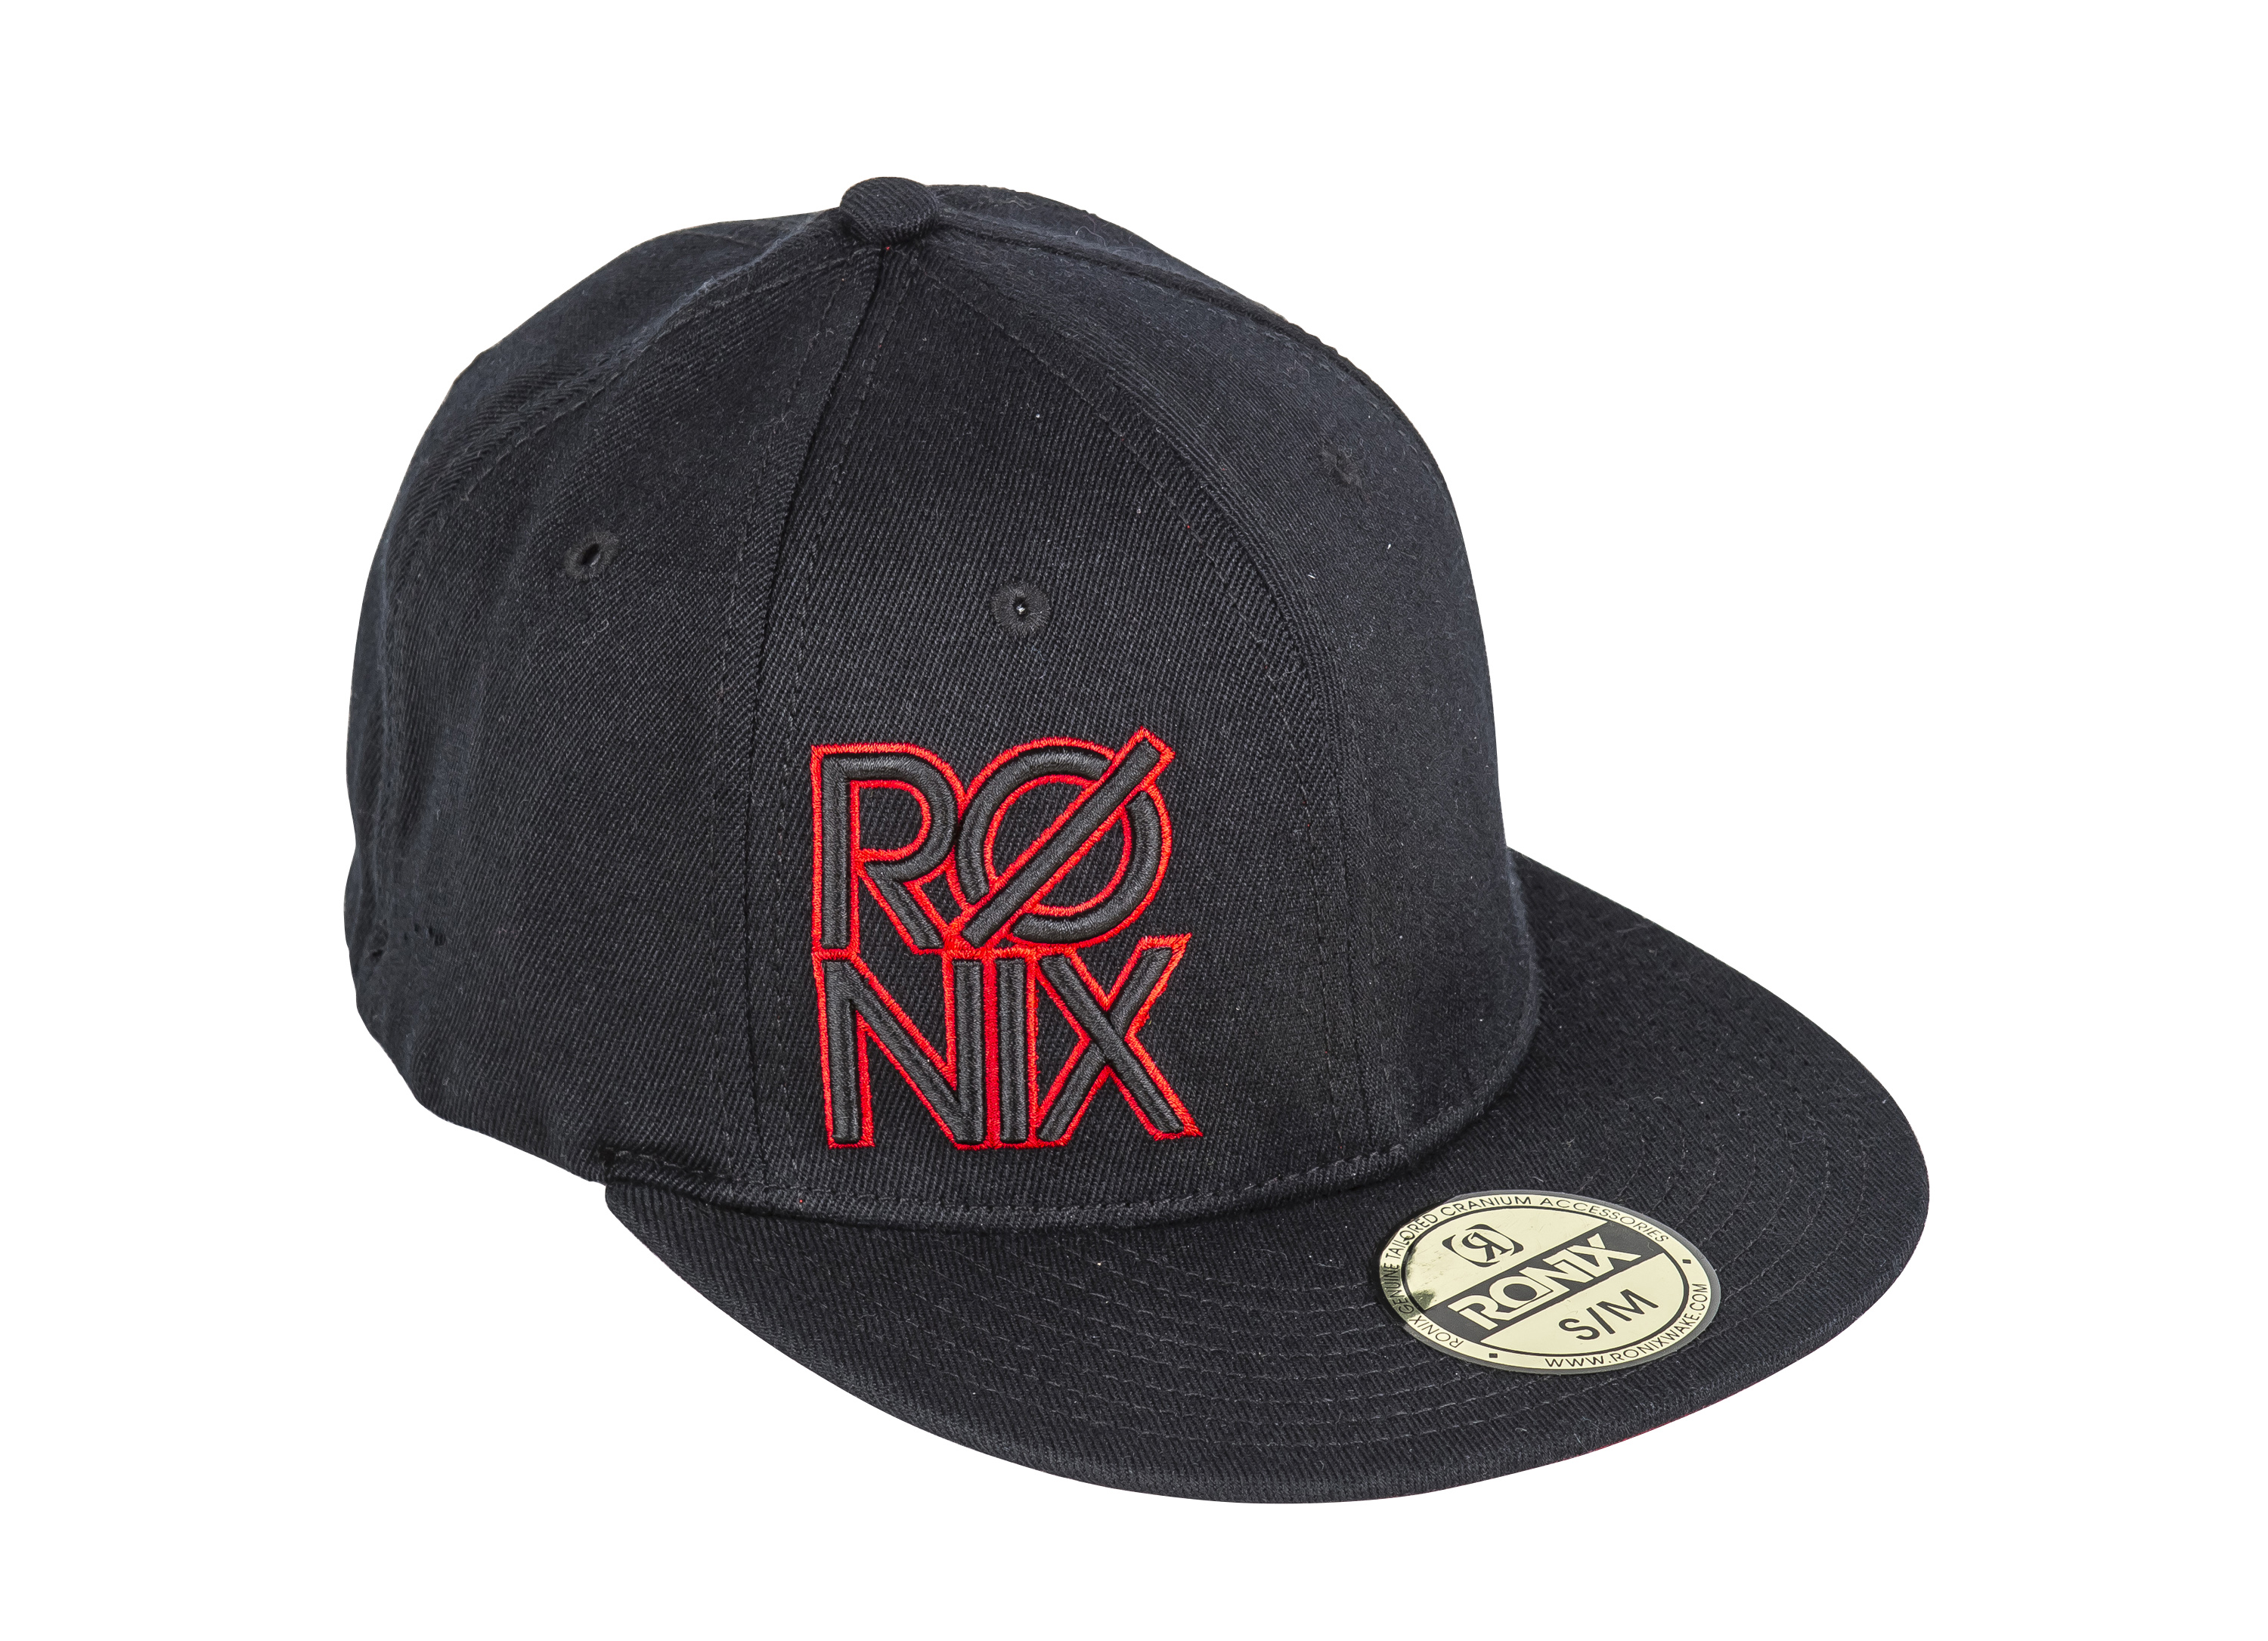   THE FLEX HAT - BLACK / RED RONIX 2017